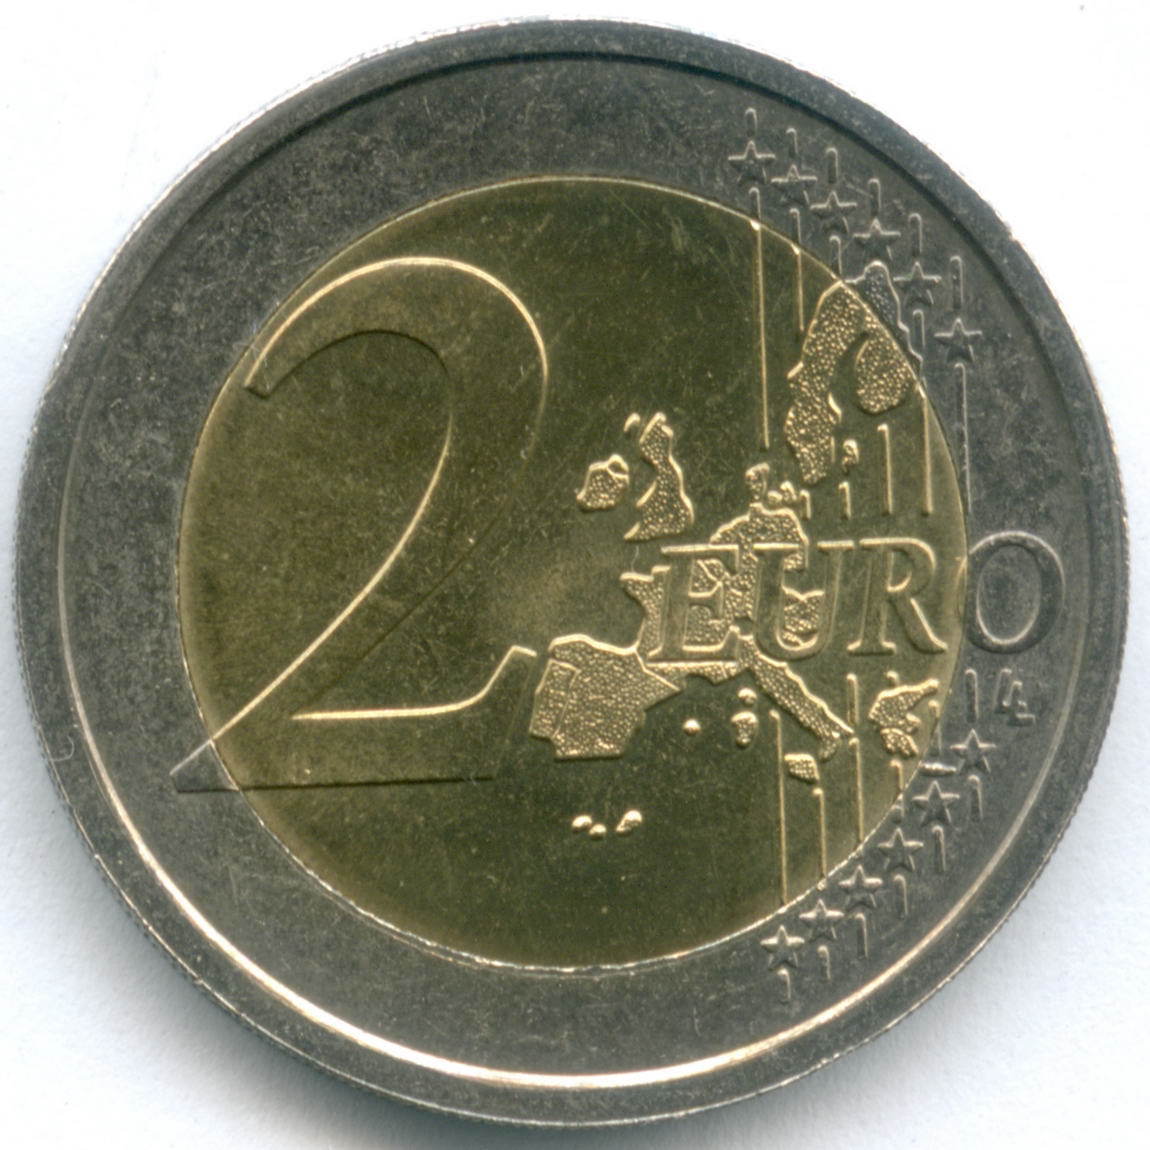 Финские евро 2004 года. 2 Евро Финляндия 2004. Фото монет евро Финляндия Конституция. 2 Евро Мекленбург купить. Евро 2001 год